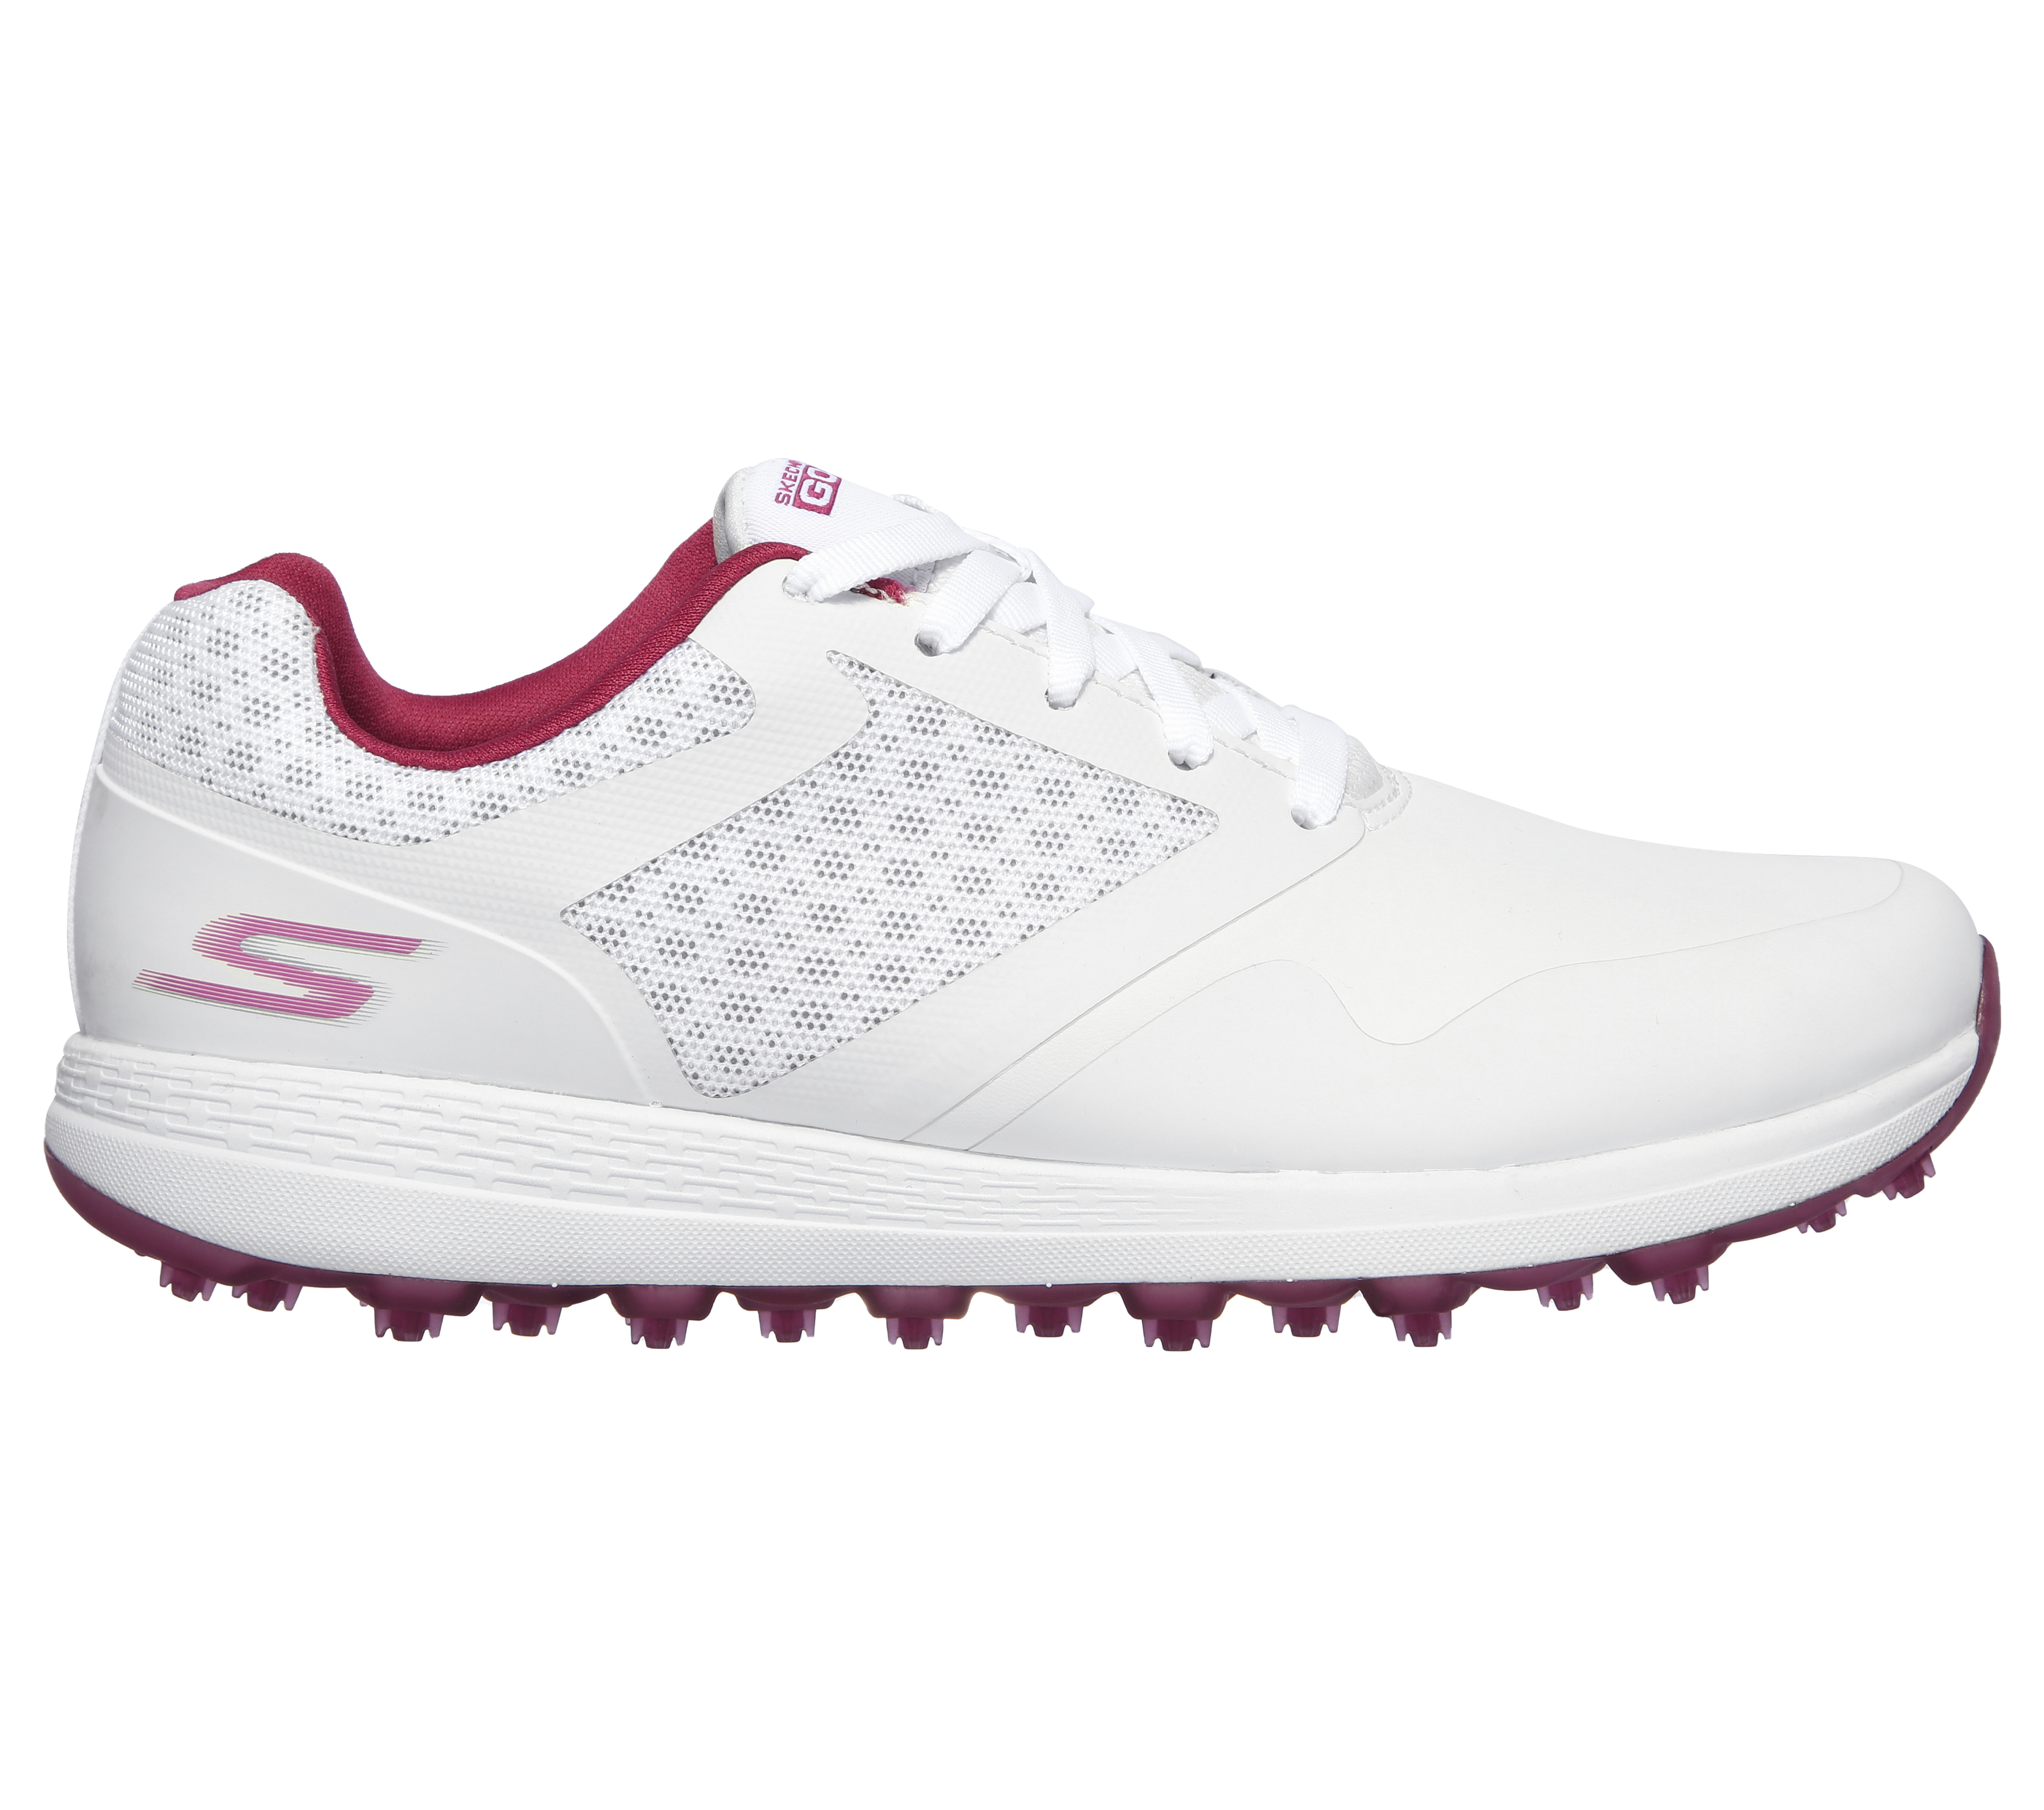 skechers women's max golf shoe